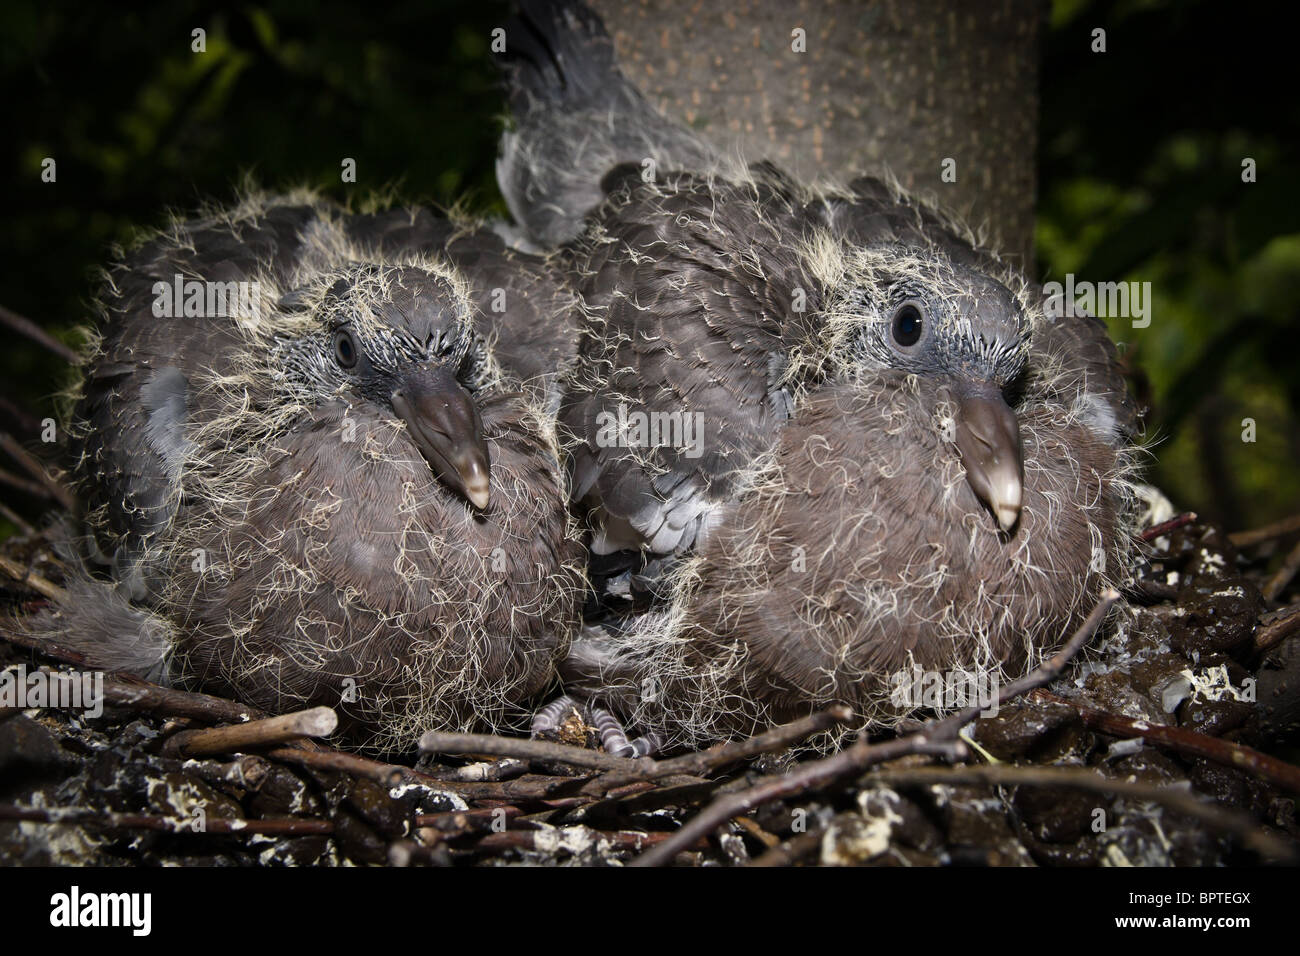 The nest of the Wood pigeon (Columba palumbus) with baby bird. Stock Photo